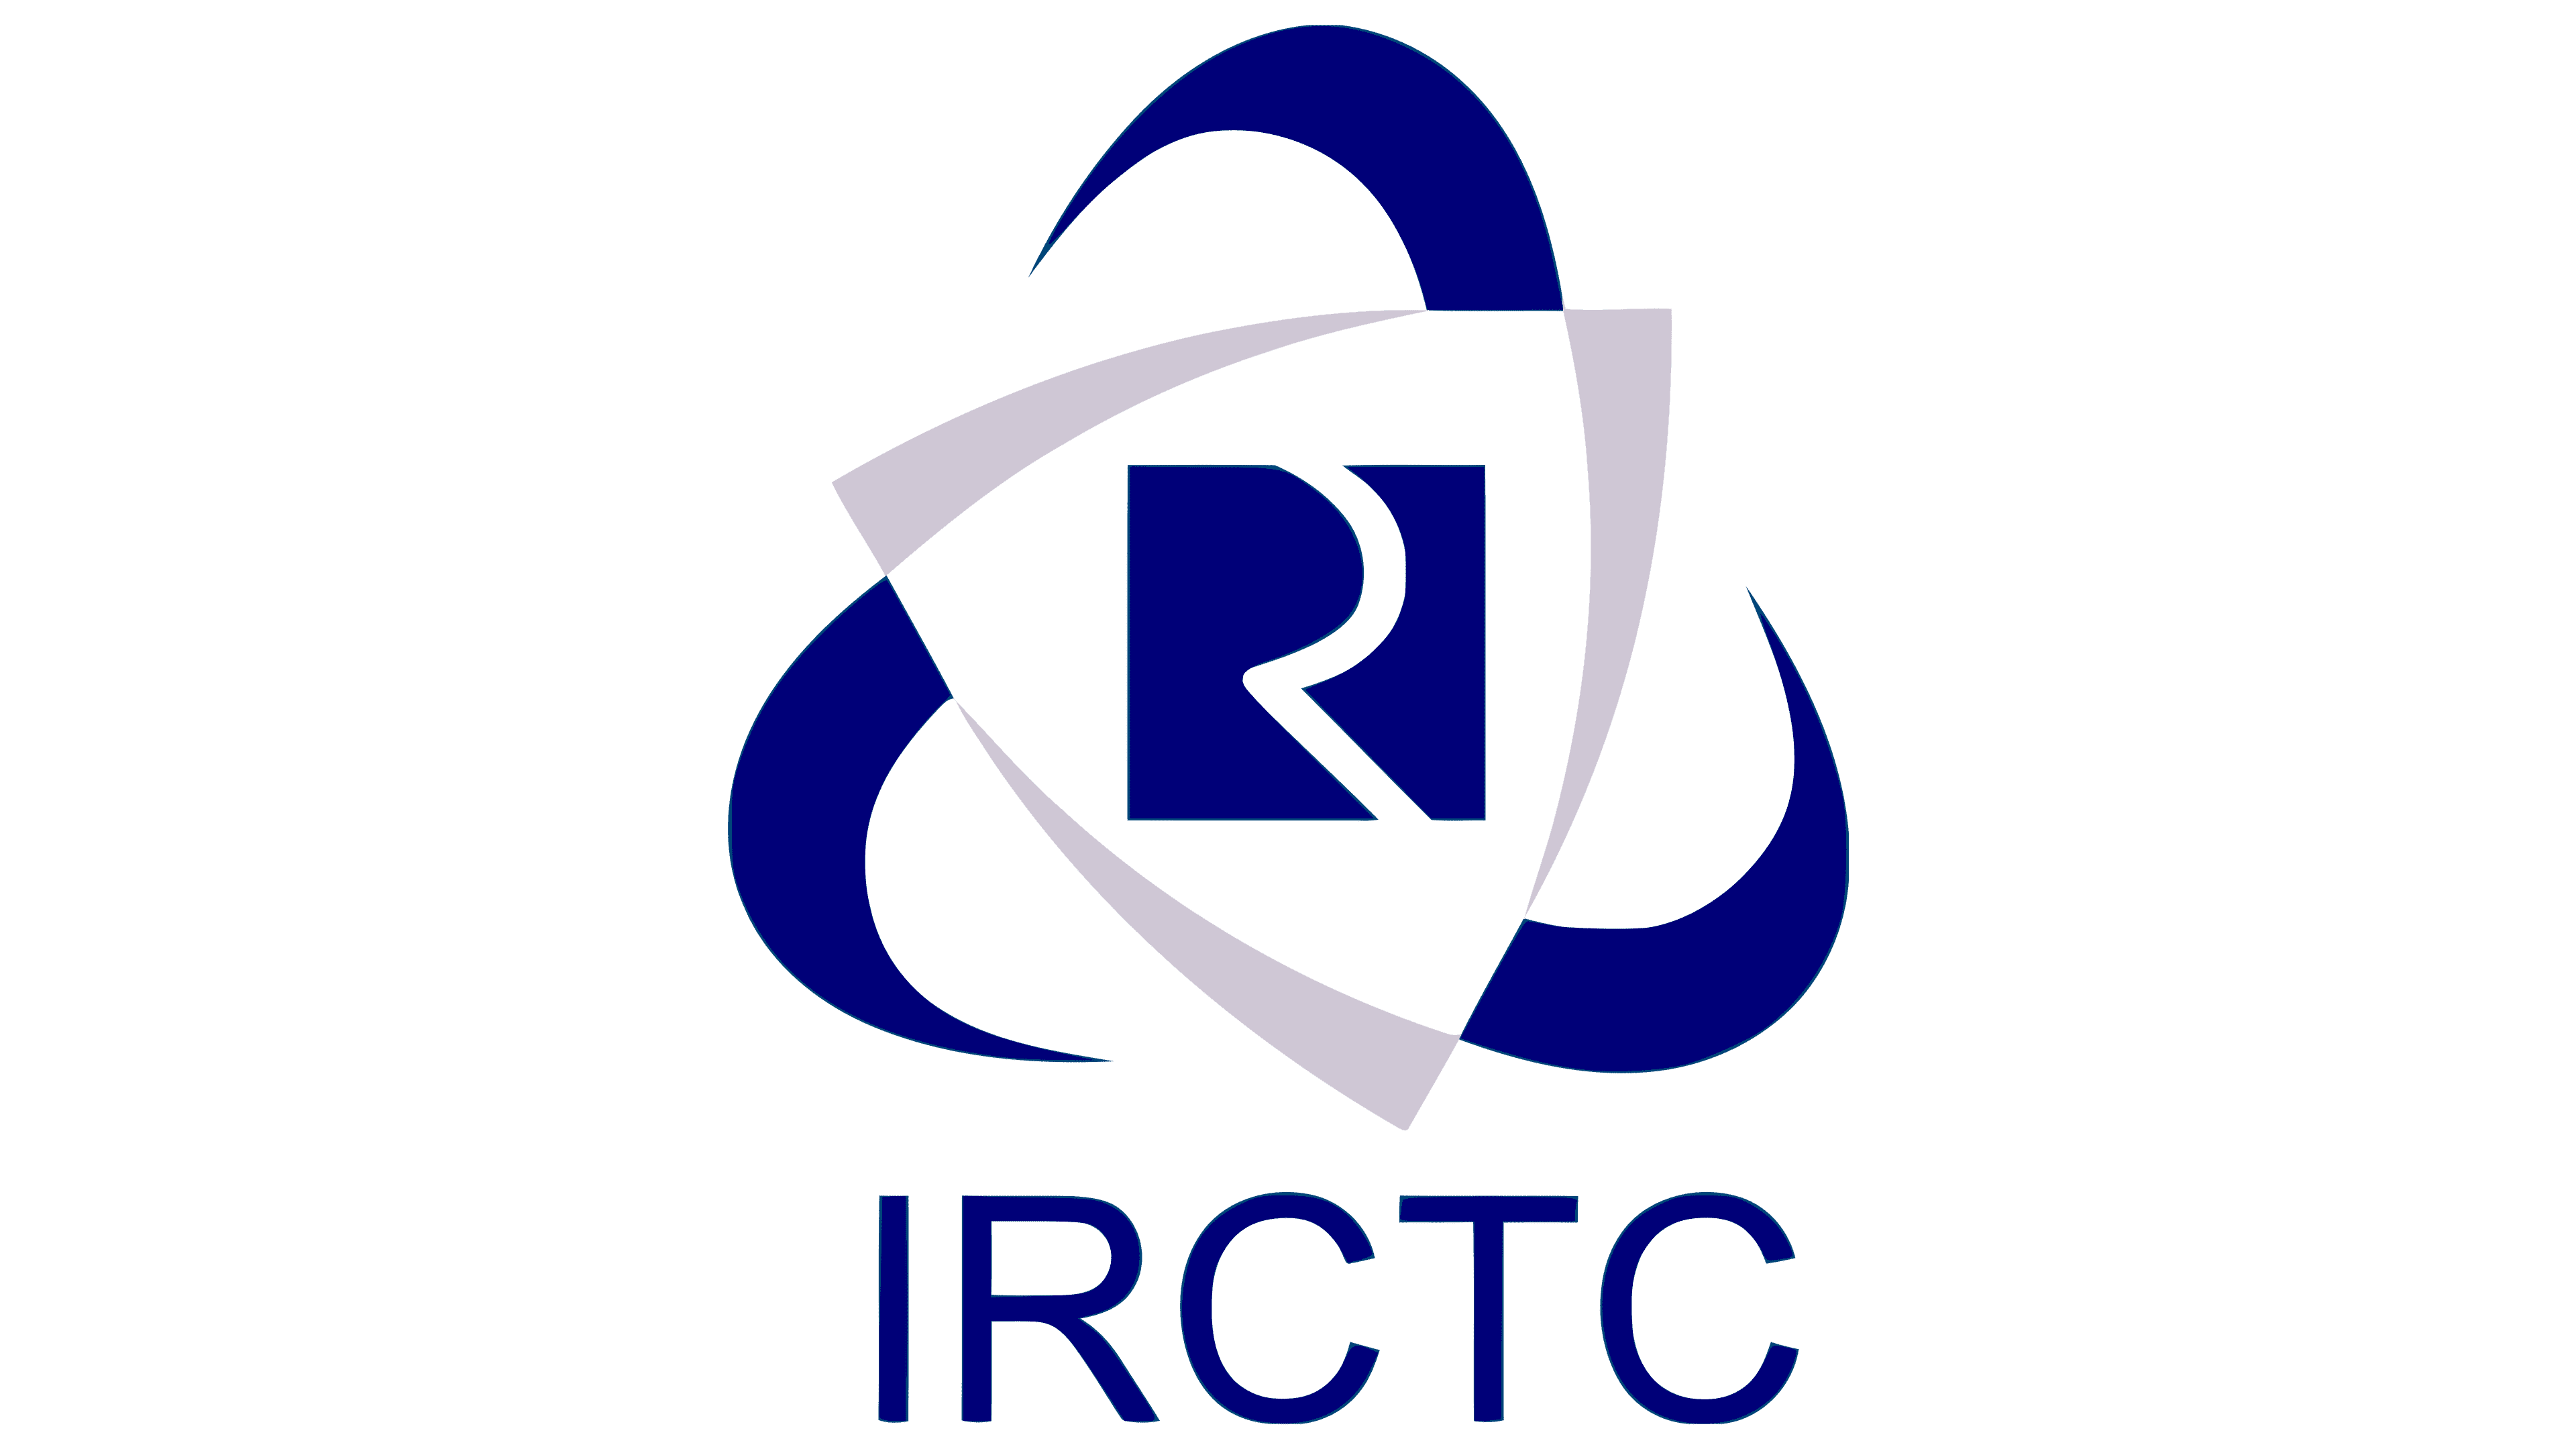 IRCTC Travel Companies in India